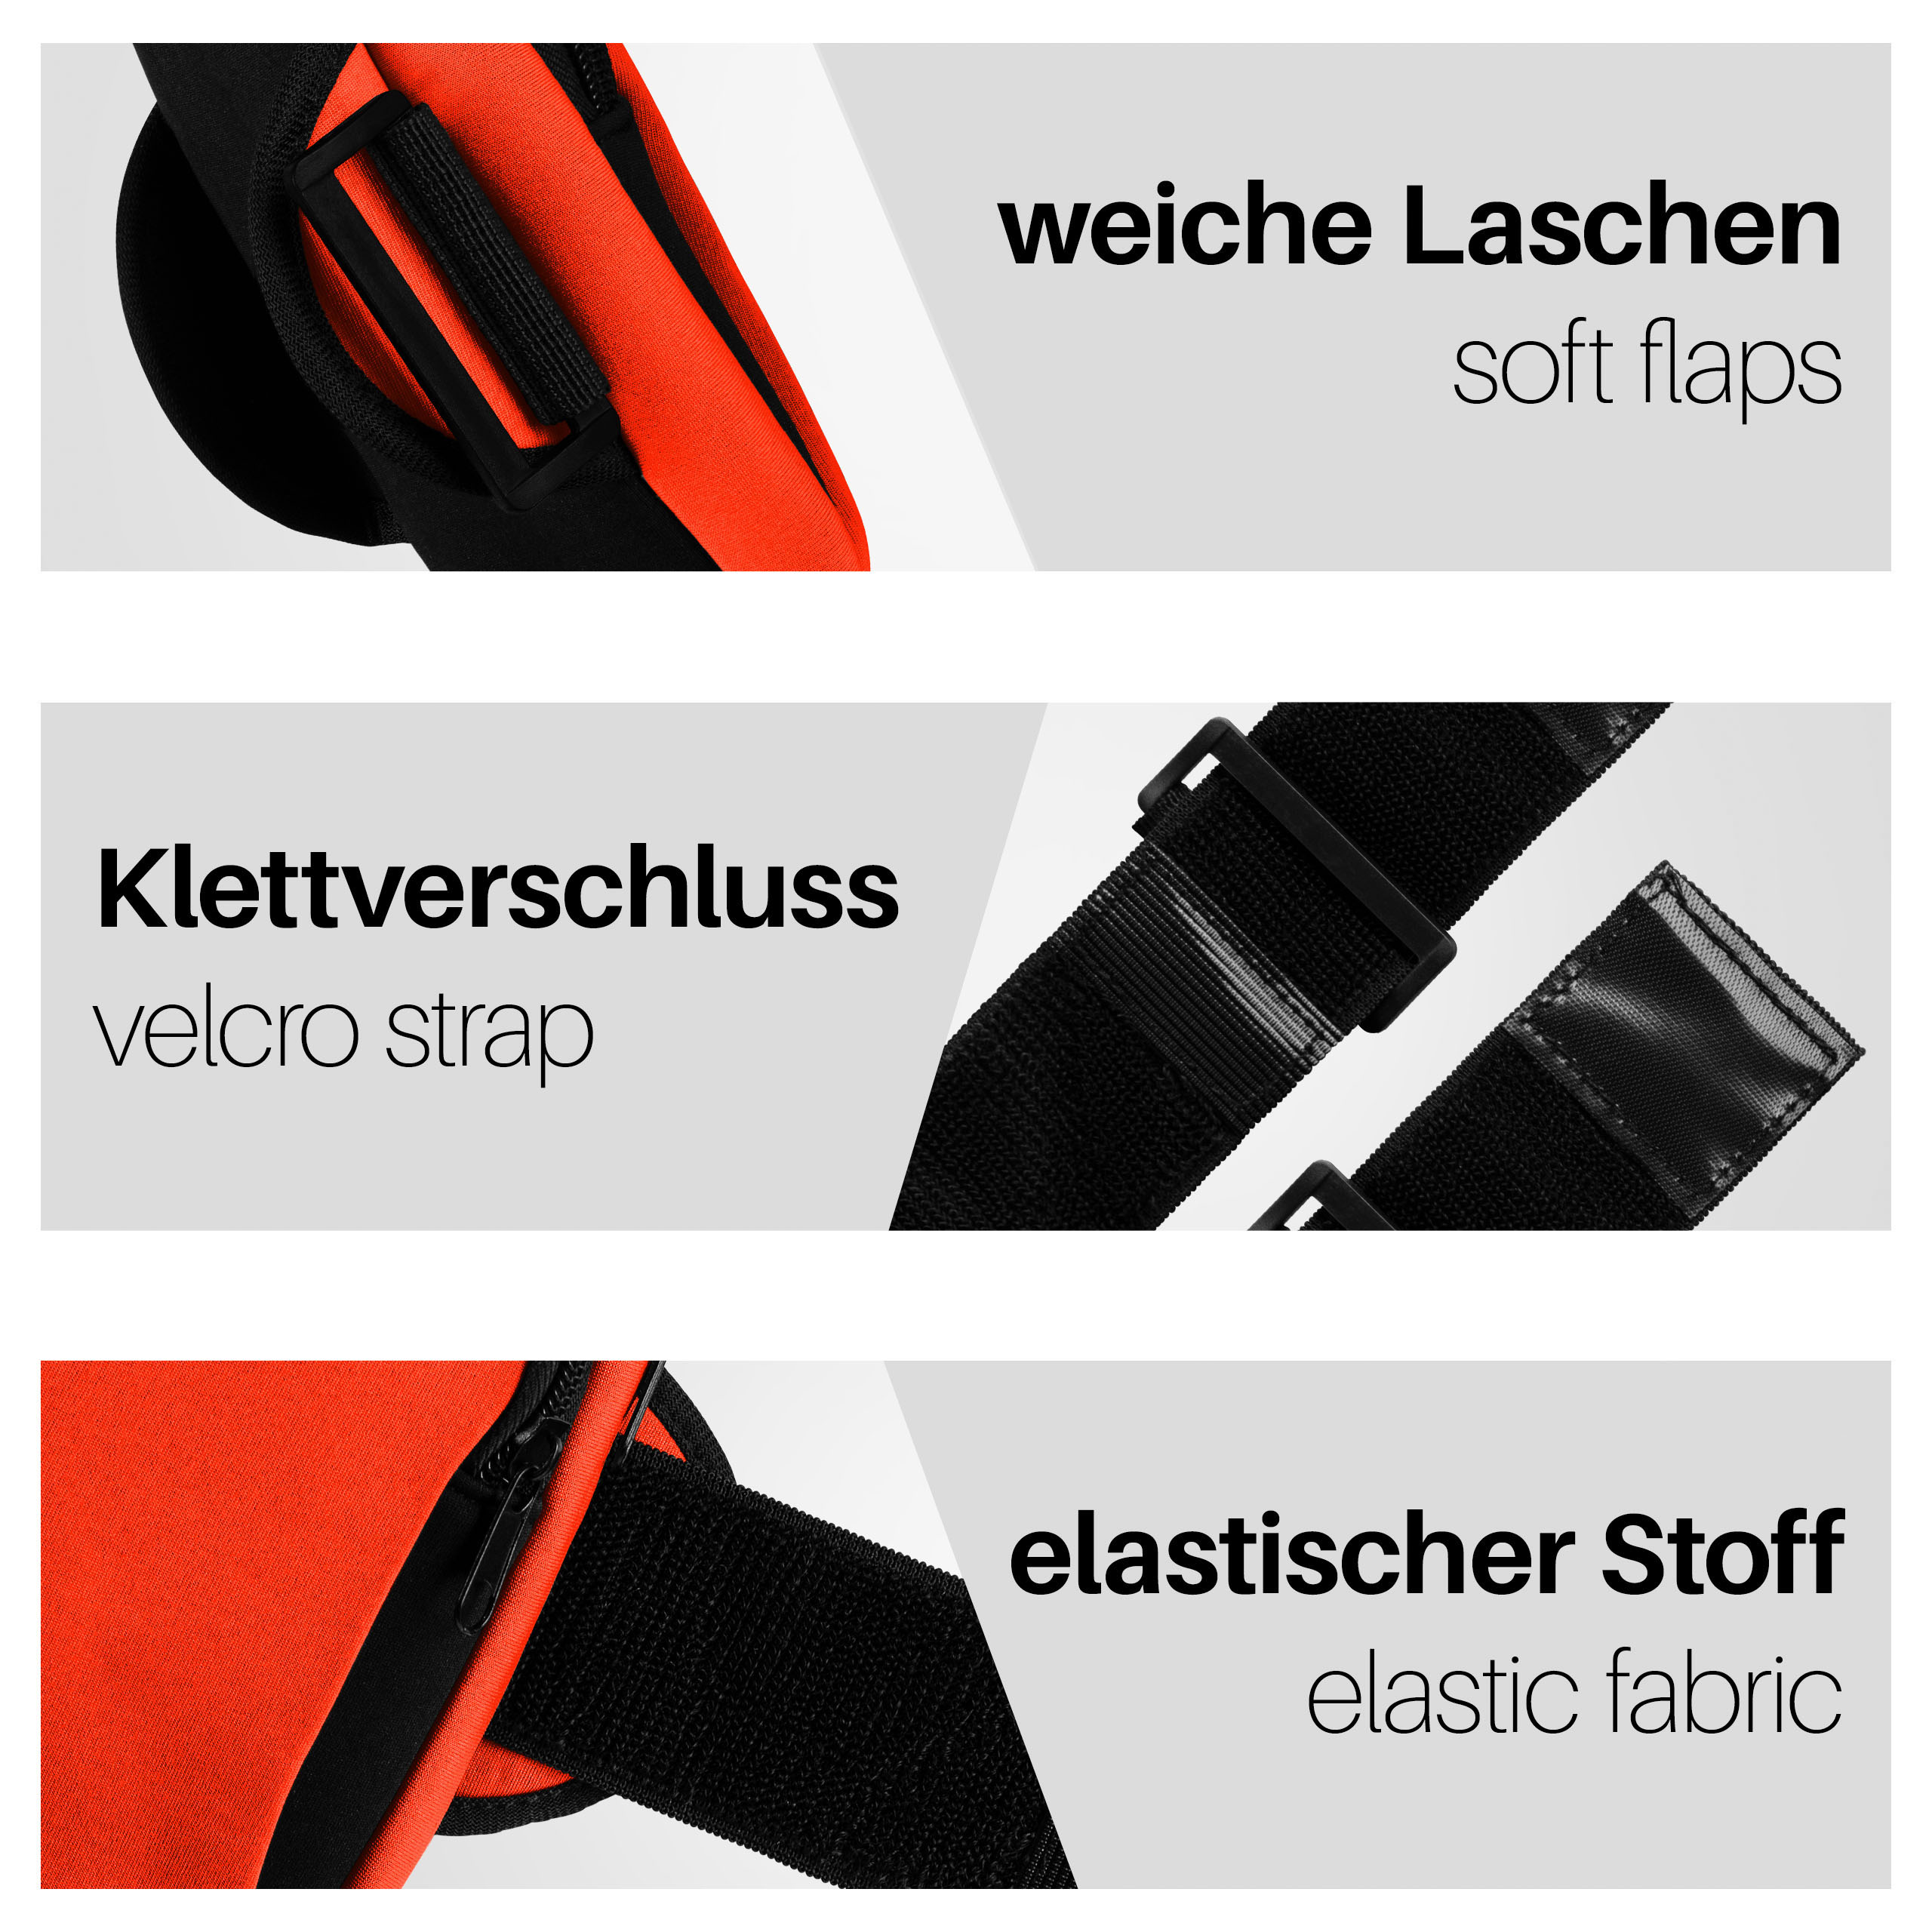 Orange Life, Cover, MOEX Sport Armband, HTC, Full U12